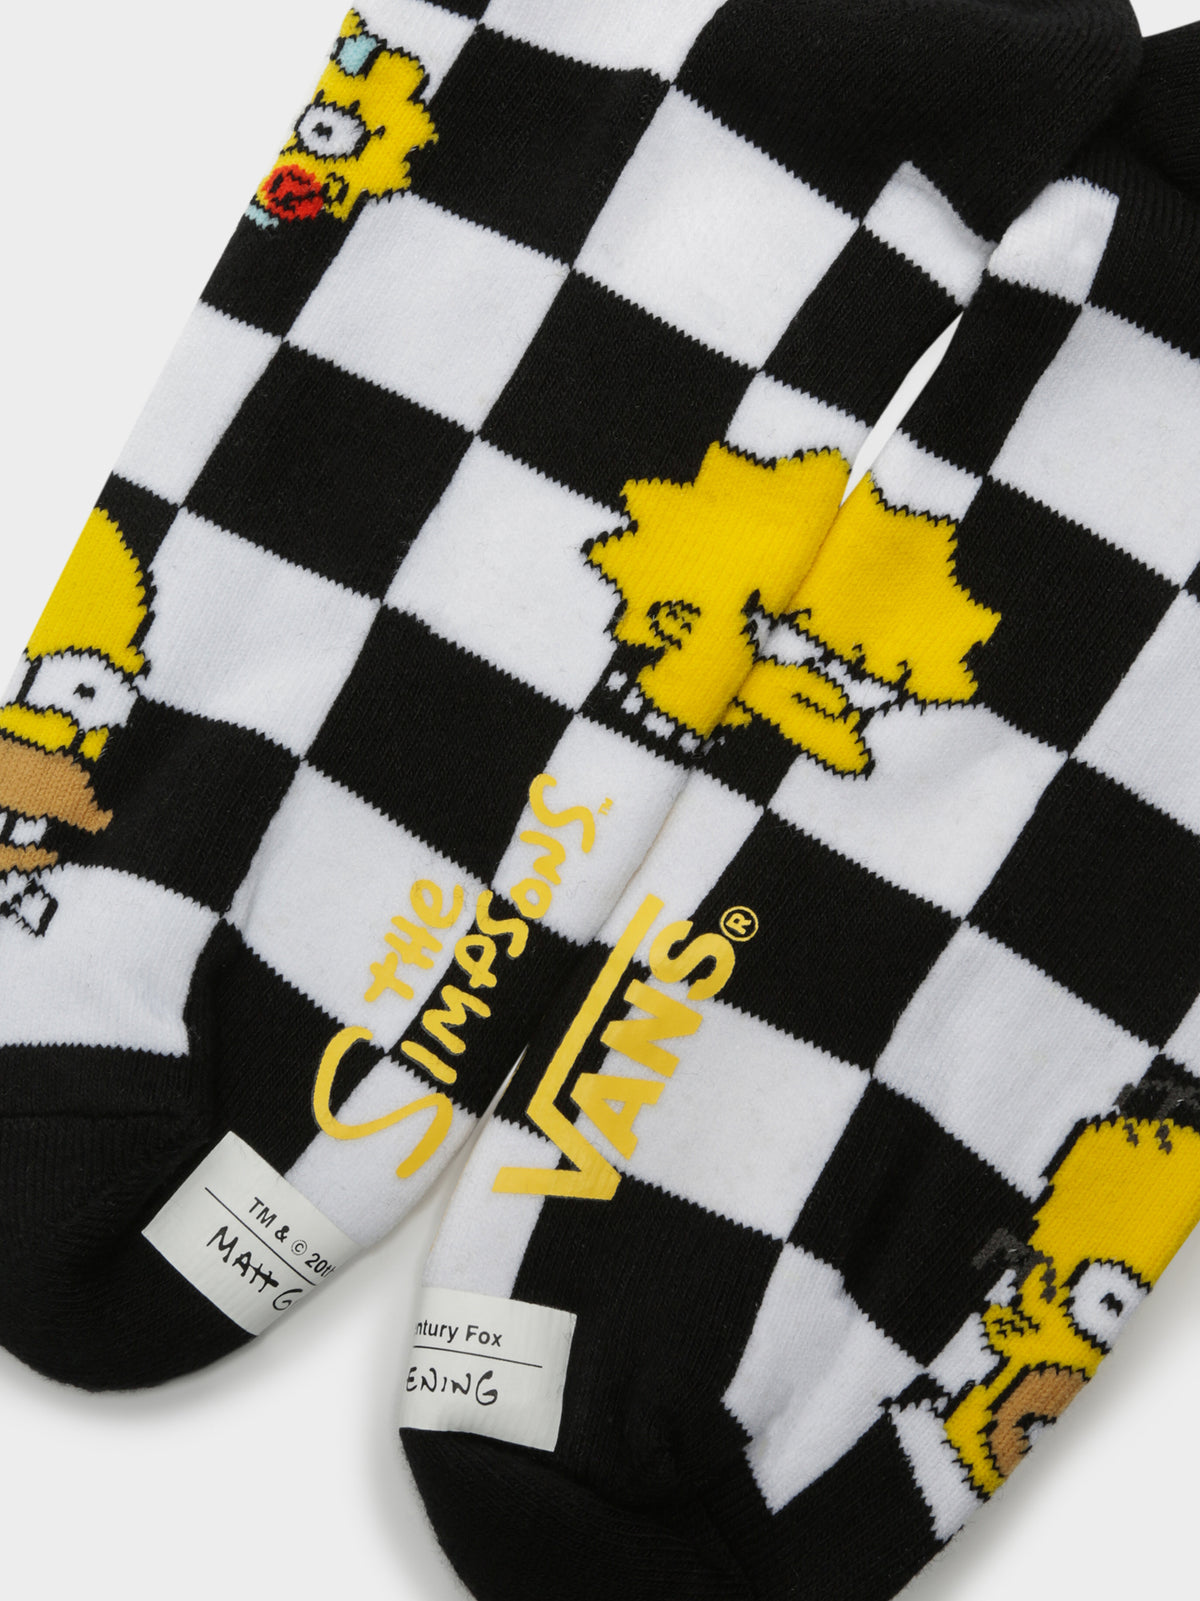 The Simpsons x Vans Crew Socks in Family Check